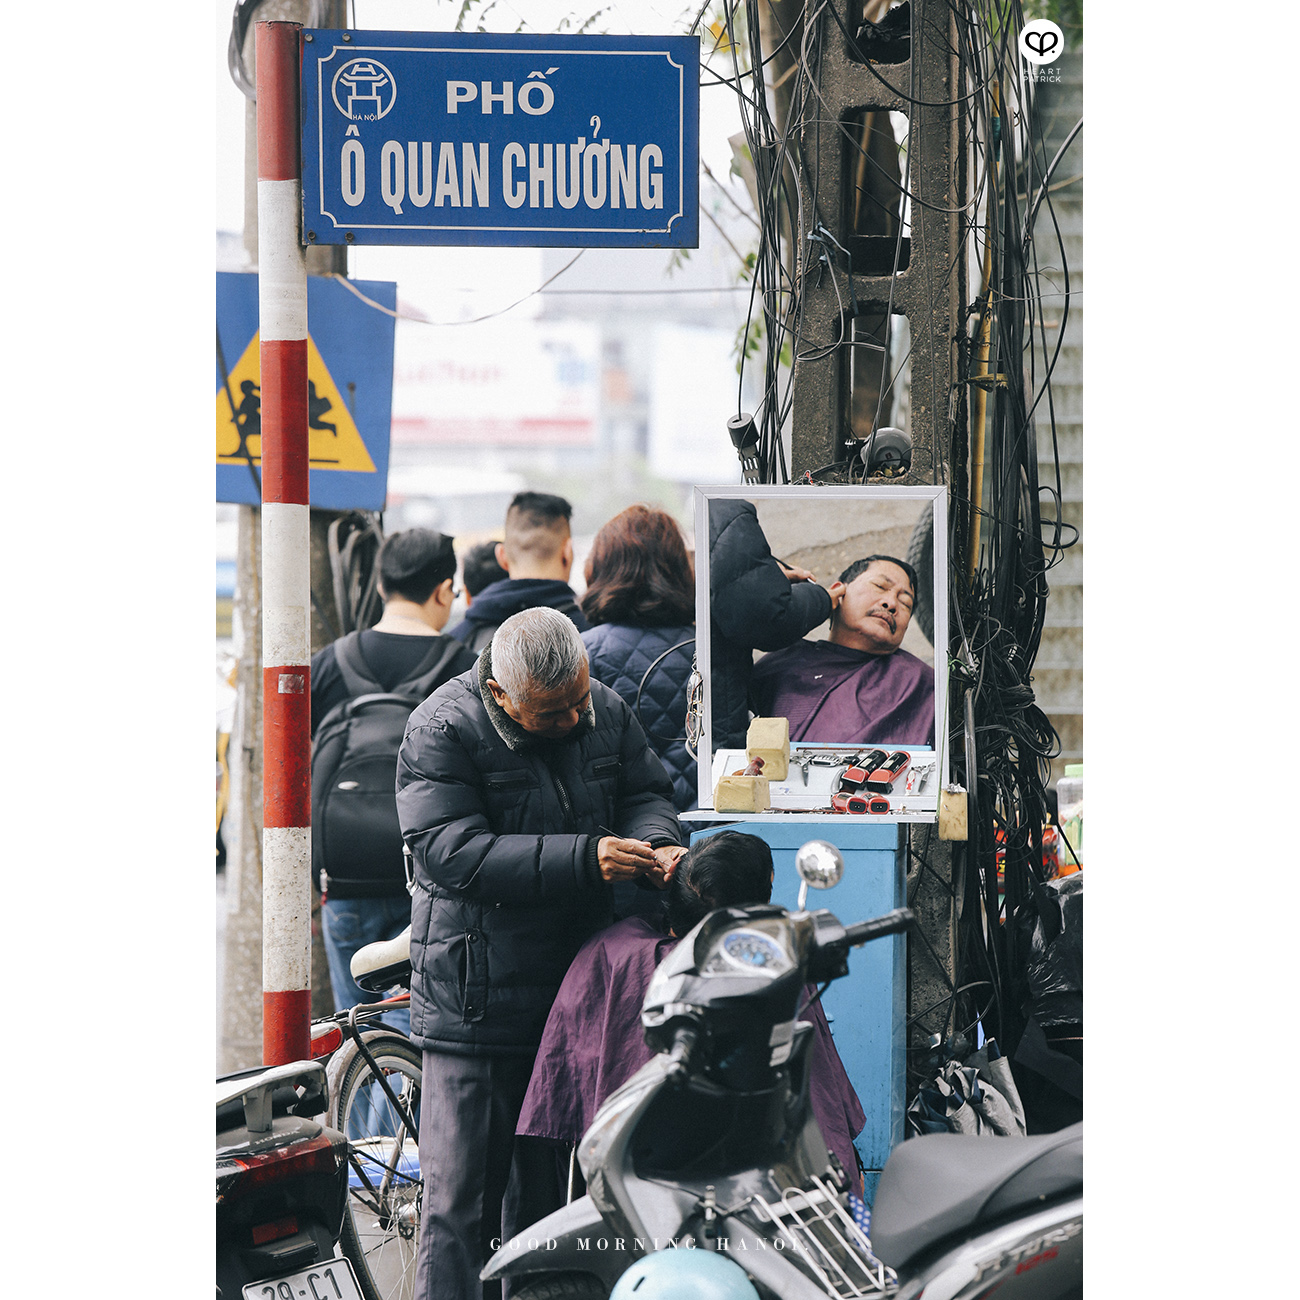 heartpatrick travel hanoi vietnam street photography street barber